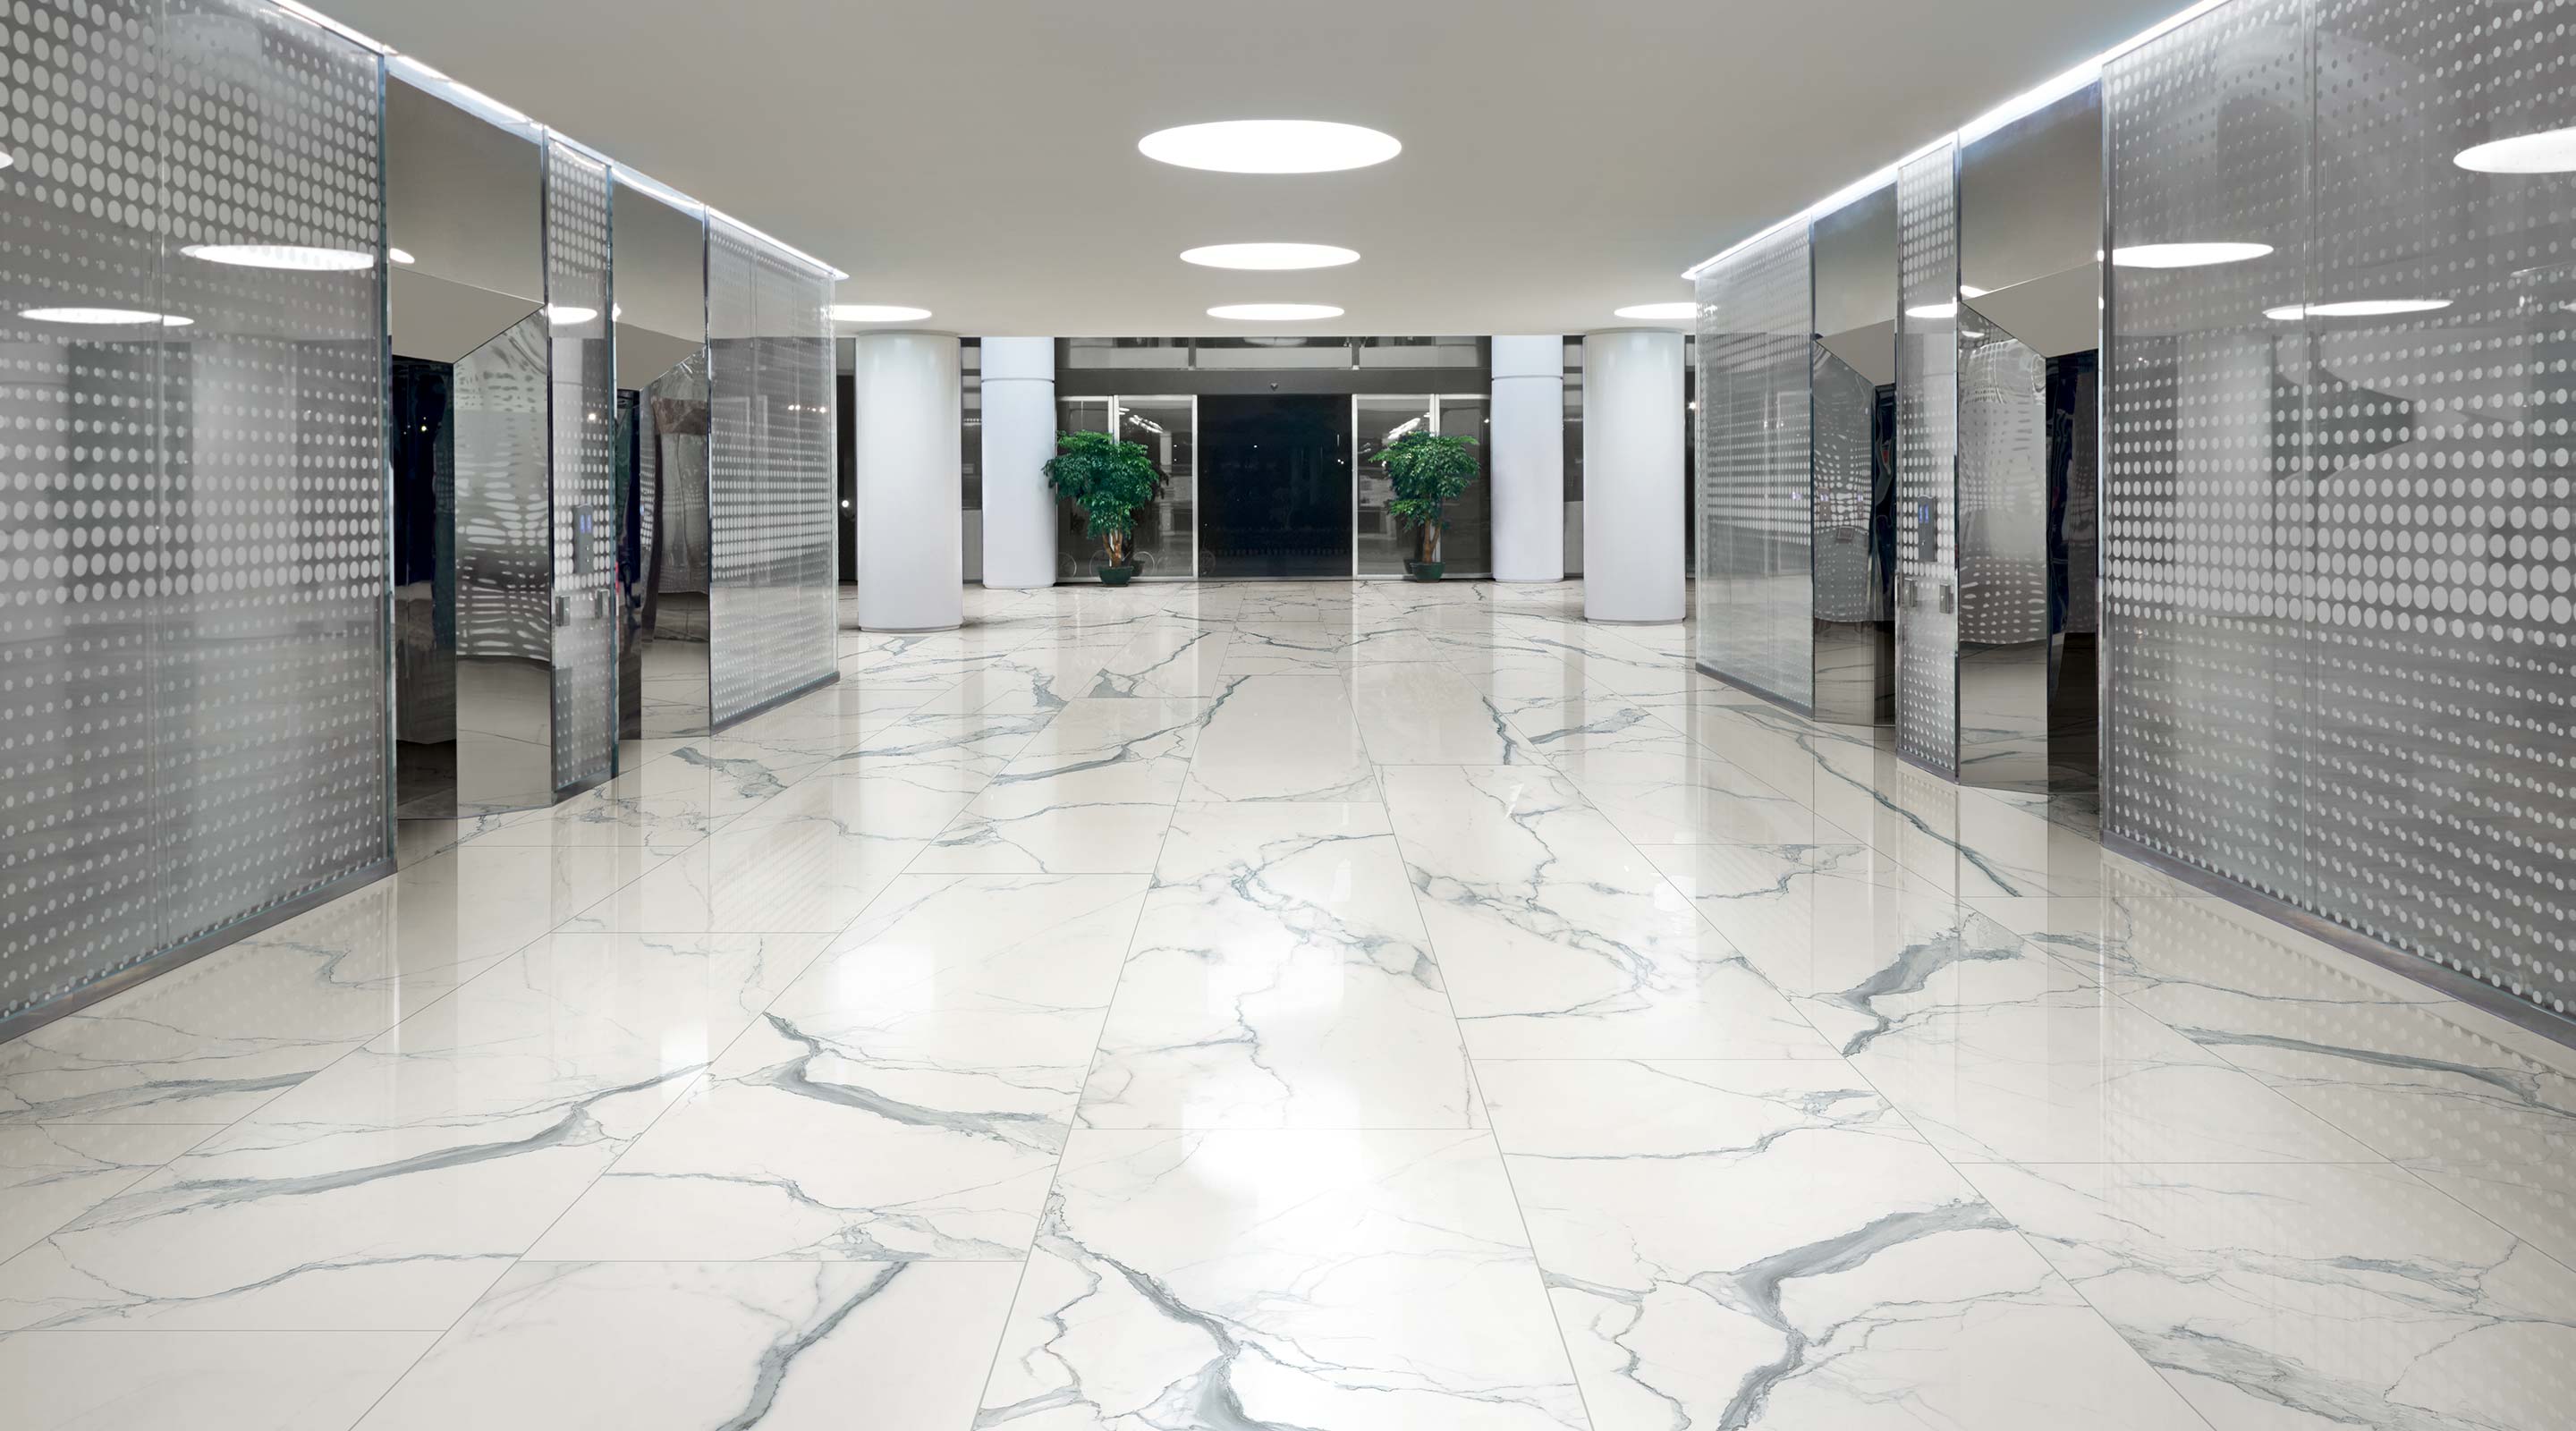 Commercial Tile Flooring For Hotels, Whole Commercial Floor Tiles